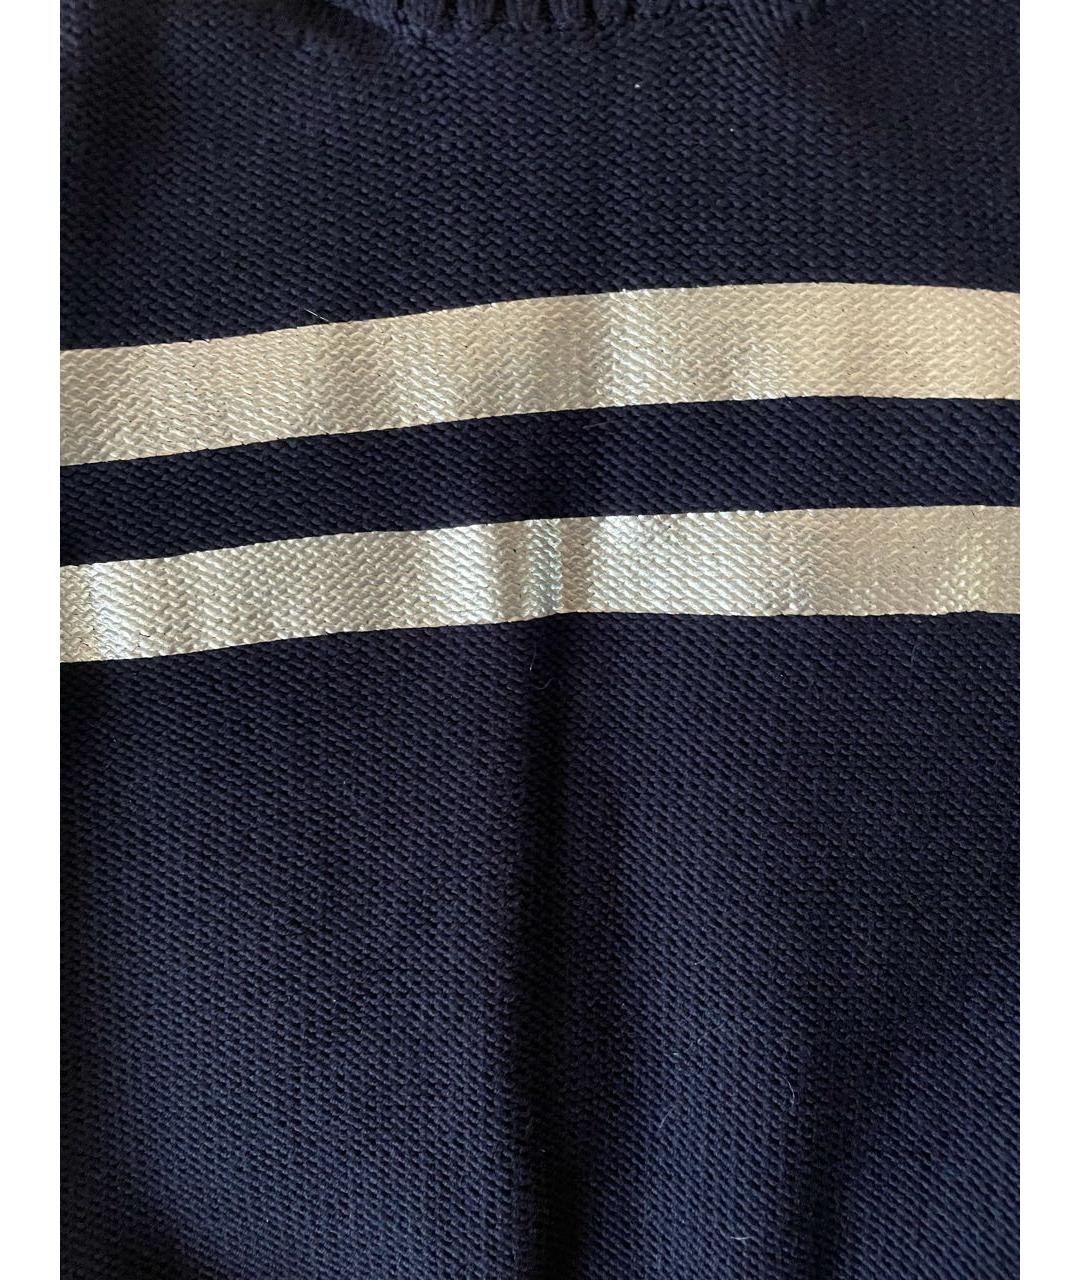 IRFE Темно-синий шерстяной джемпер / свитер, фото 2